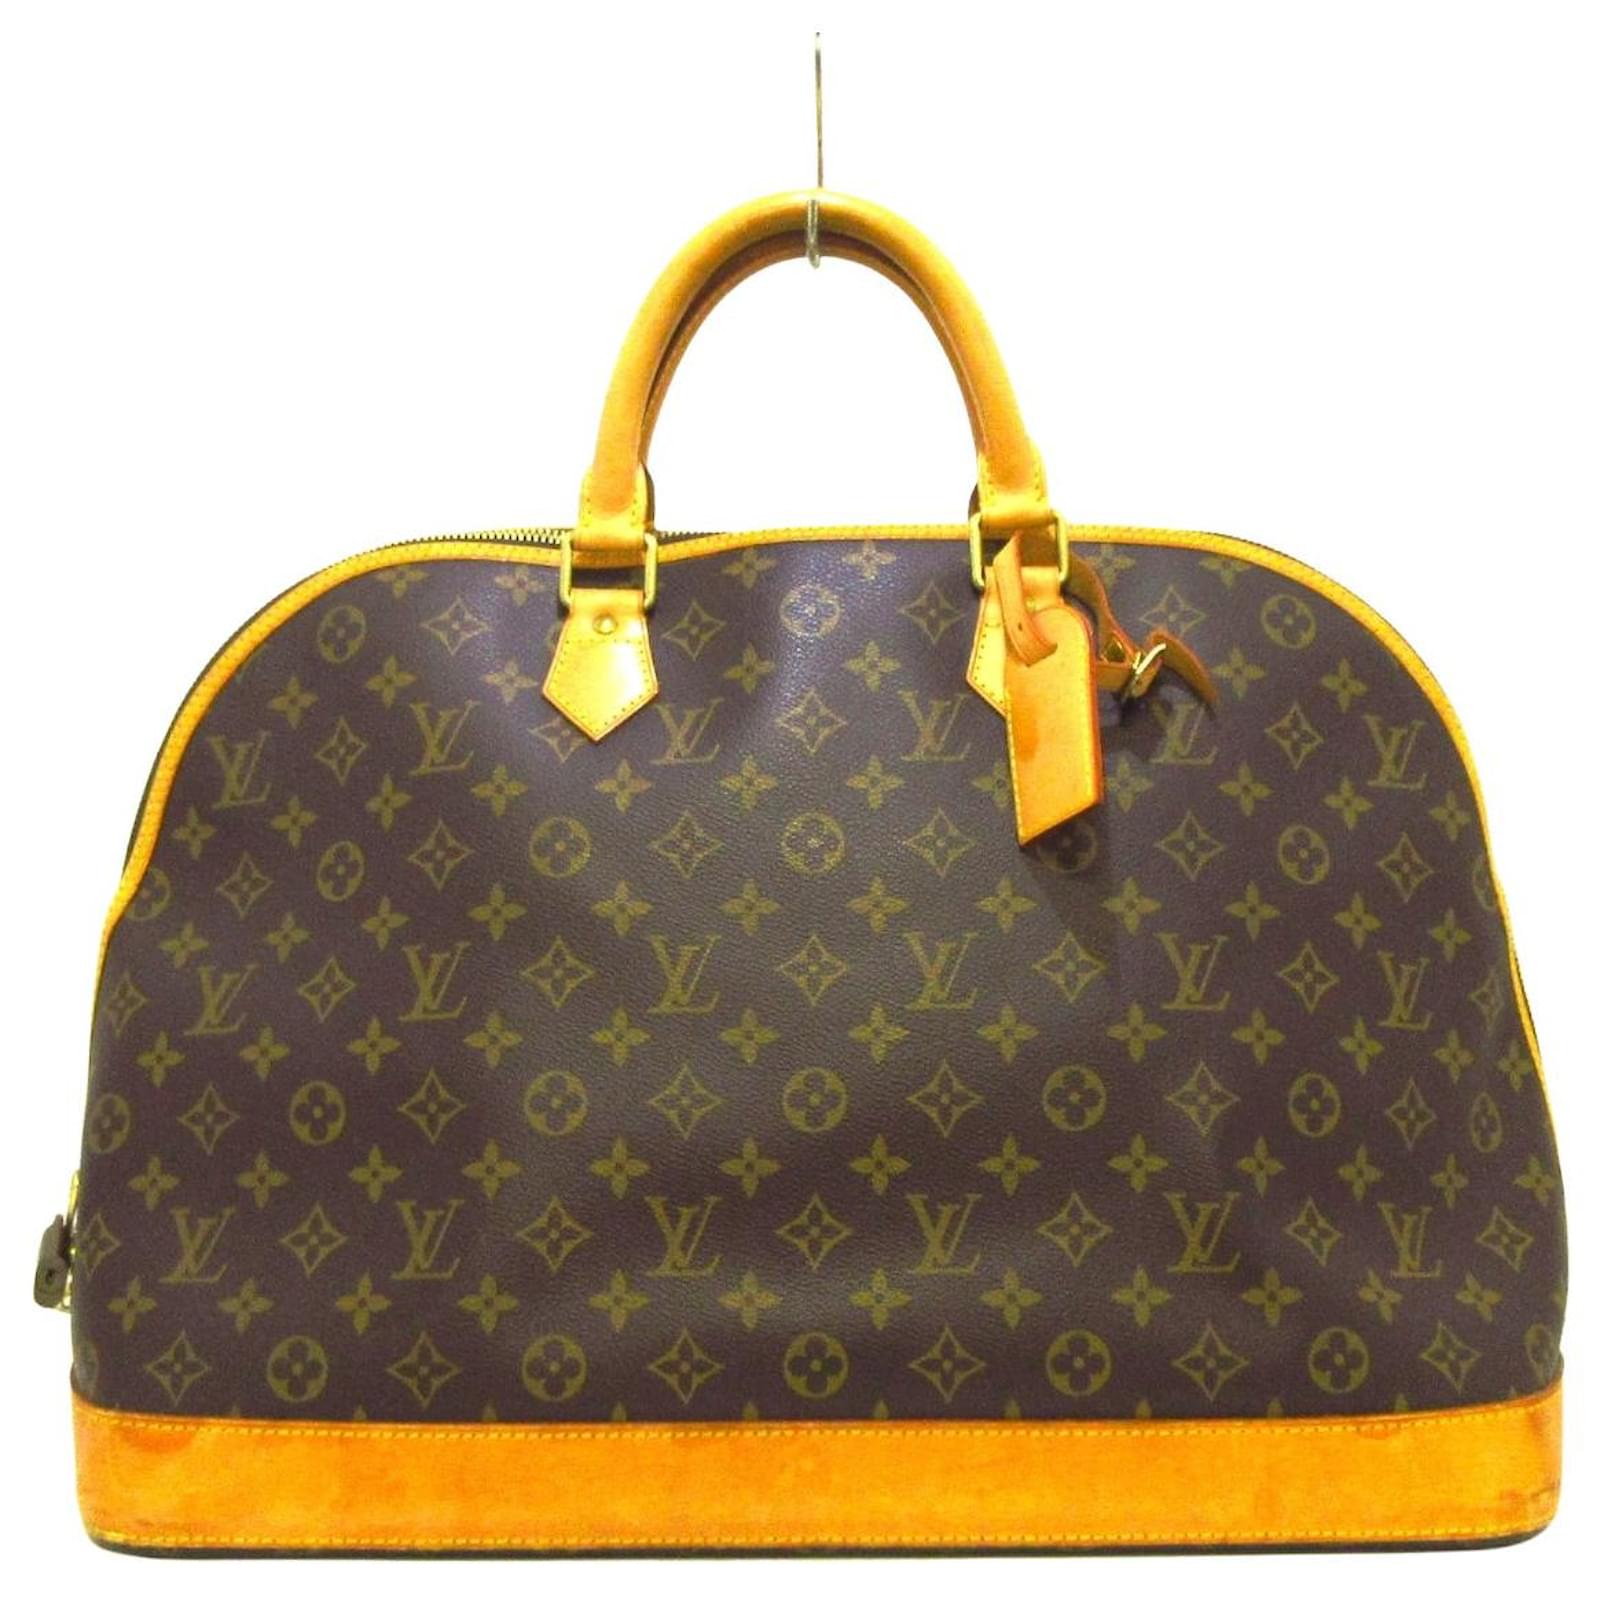 Louis Vuitton Alma travel bag